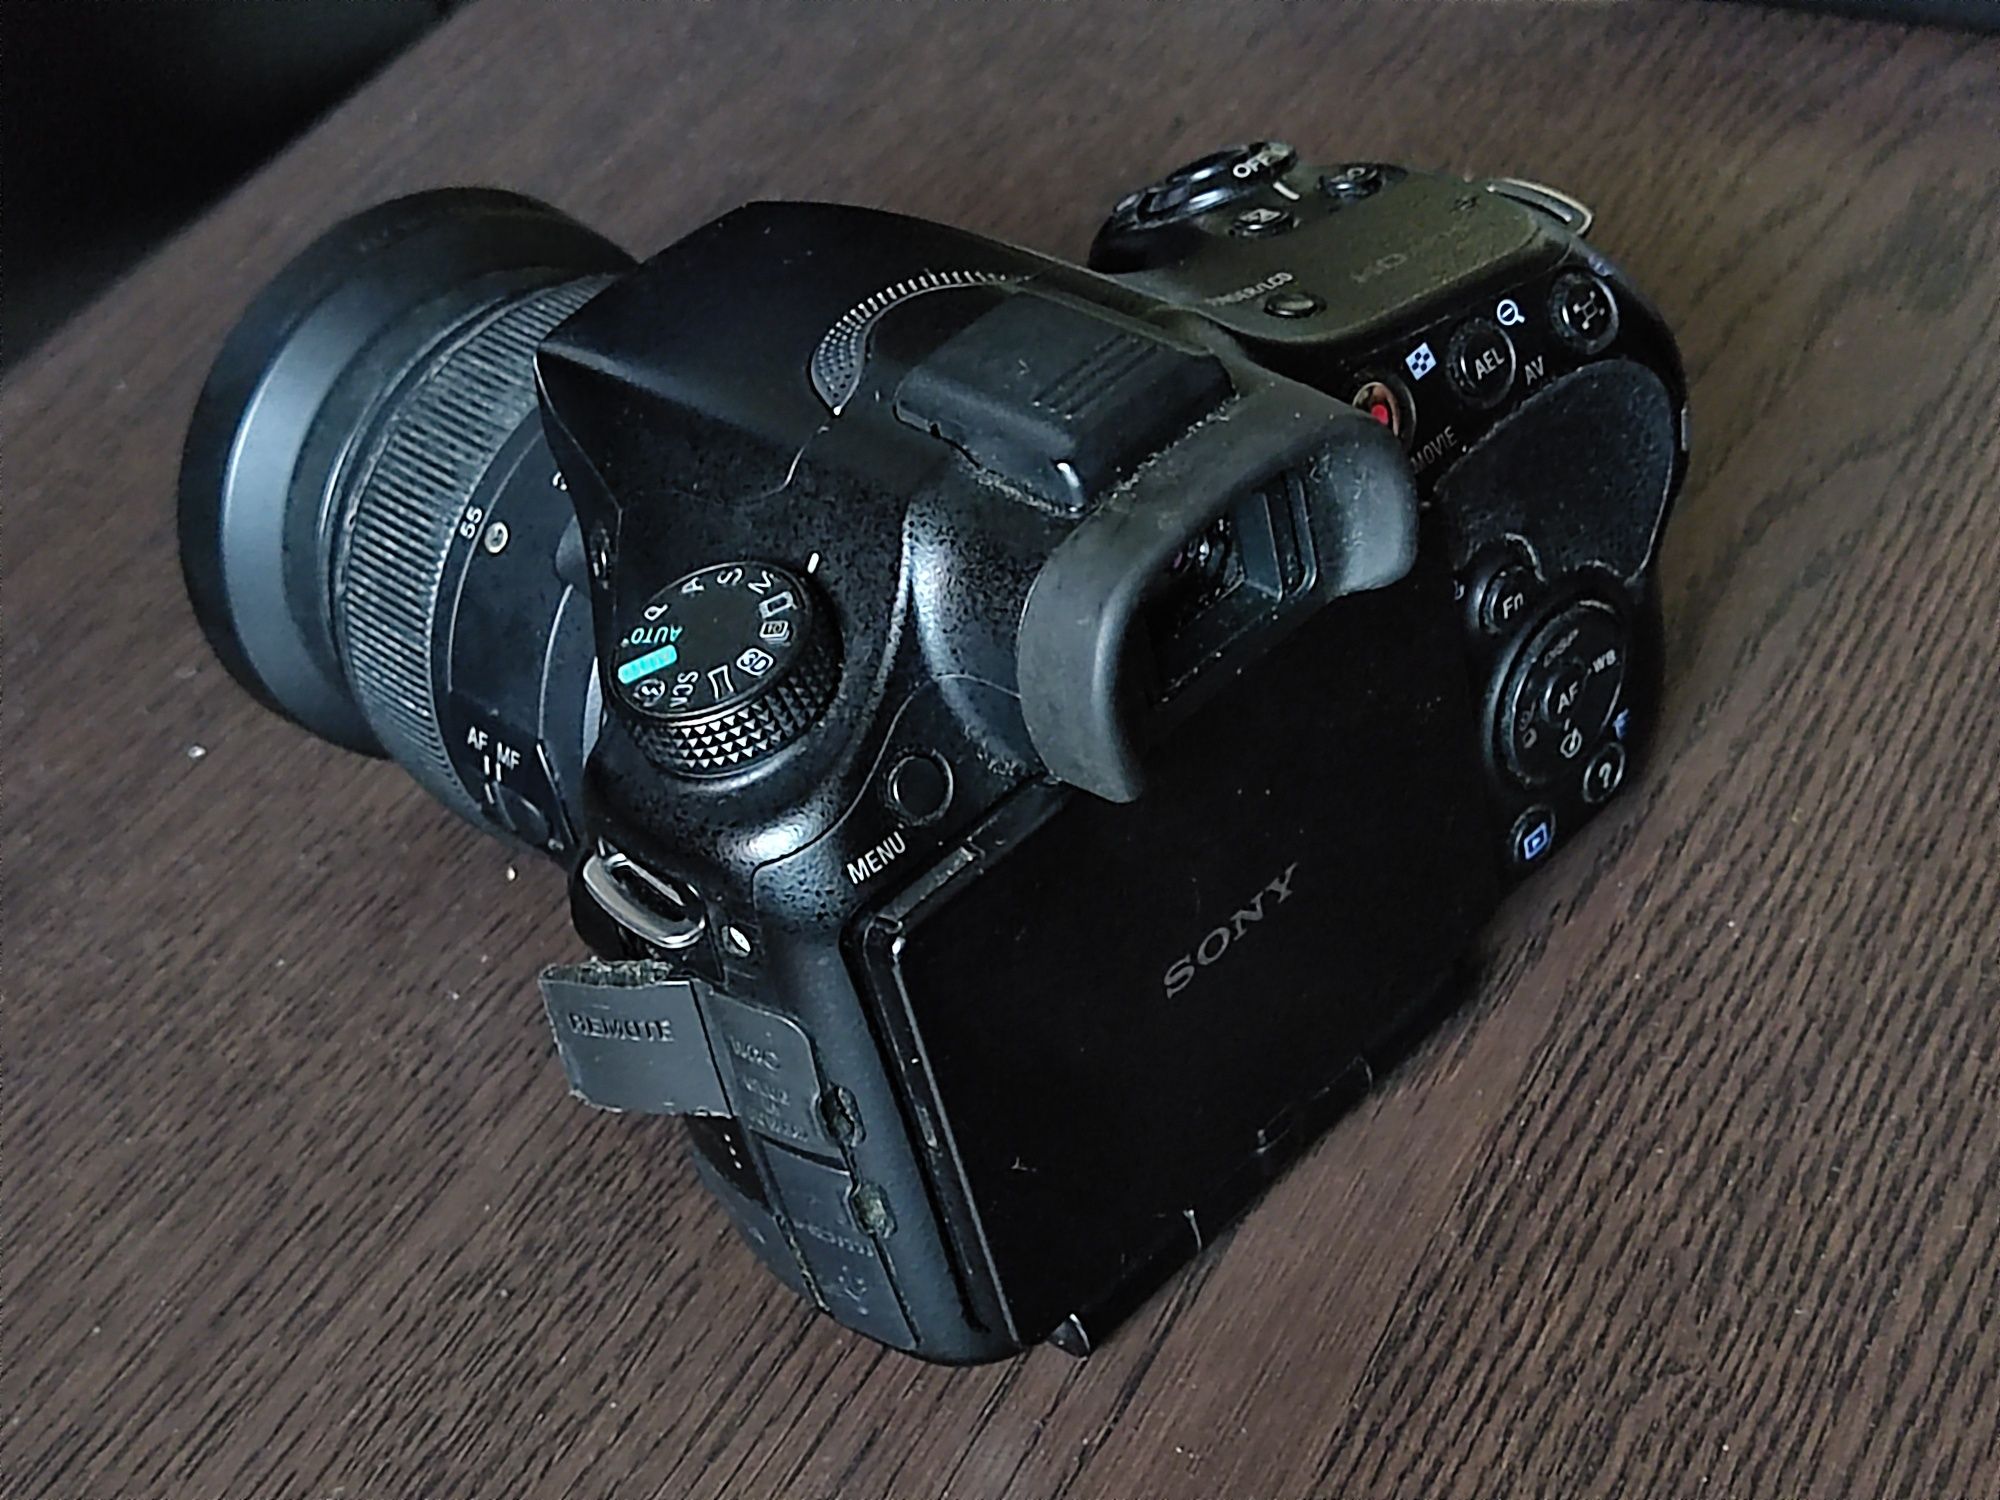 Sony Alpha SLT-A65 + DT 18-55mm SAM
10+ a